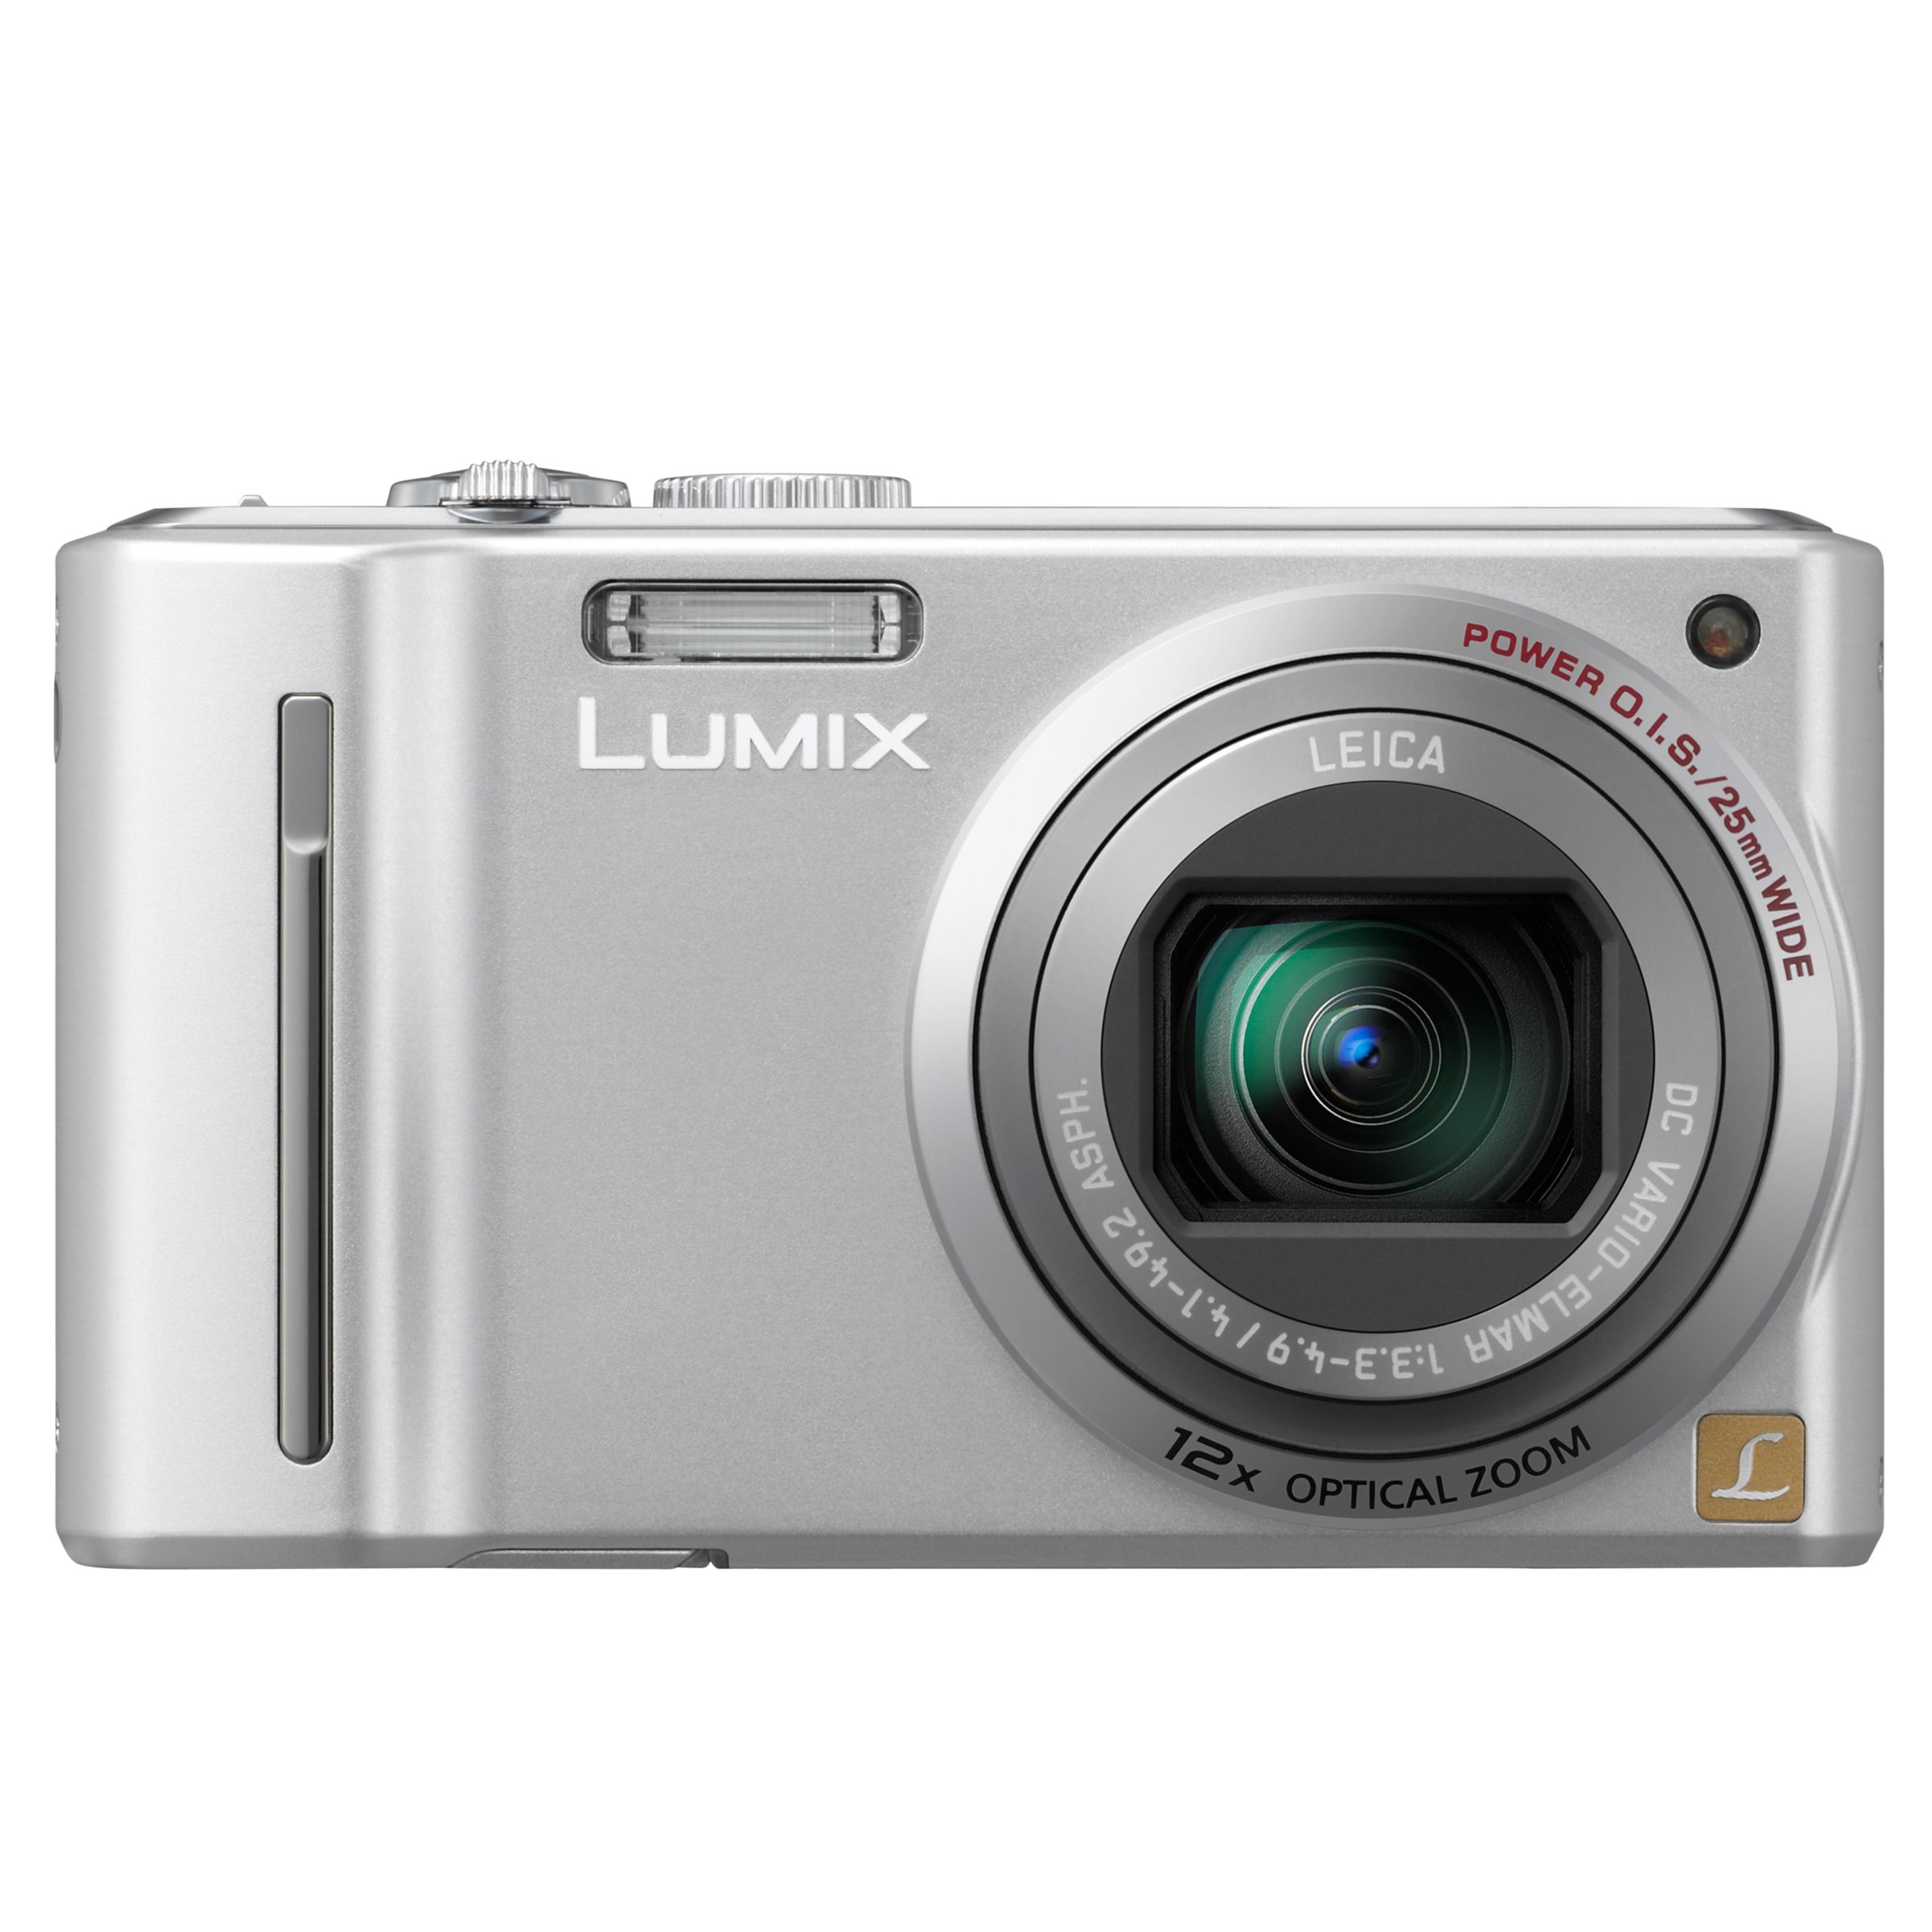 Panasonic Lumix DMC-TZ8EB-K Digital Camera, Silver at John Lewis